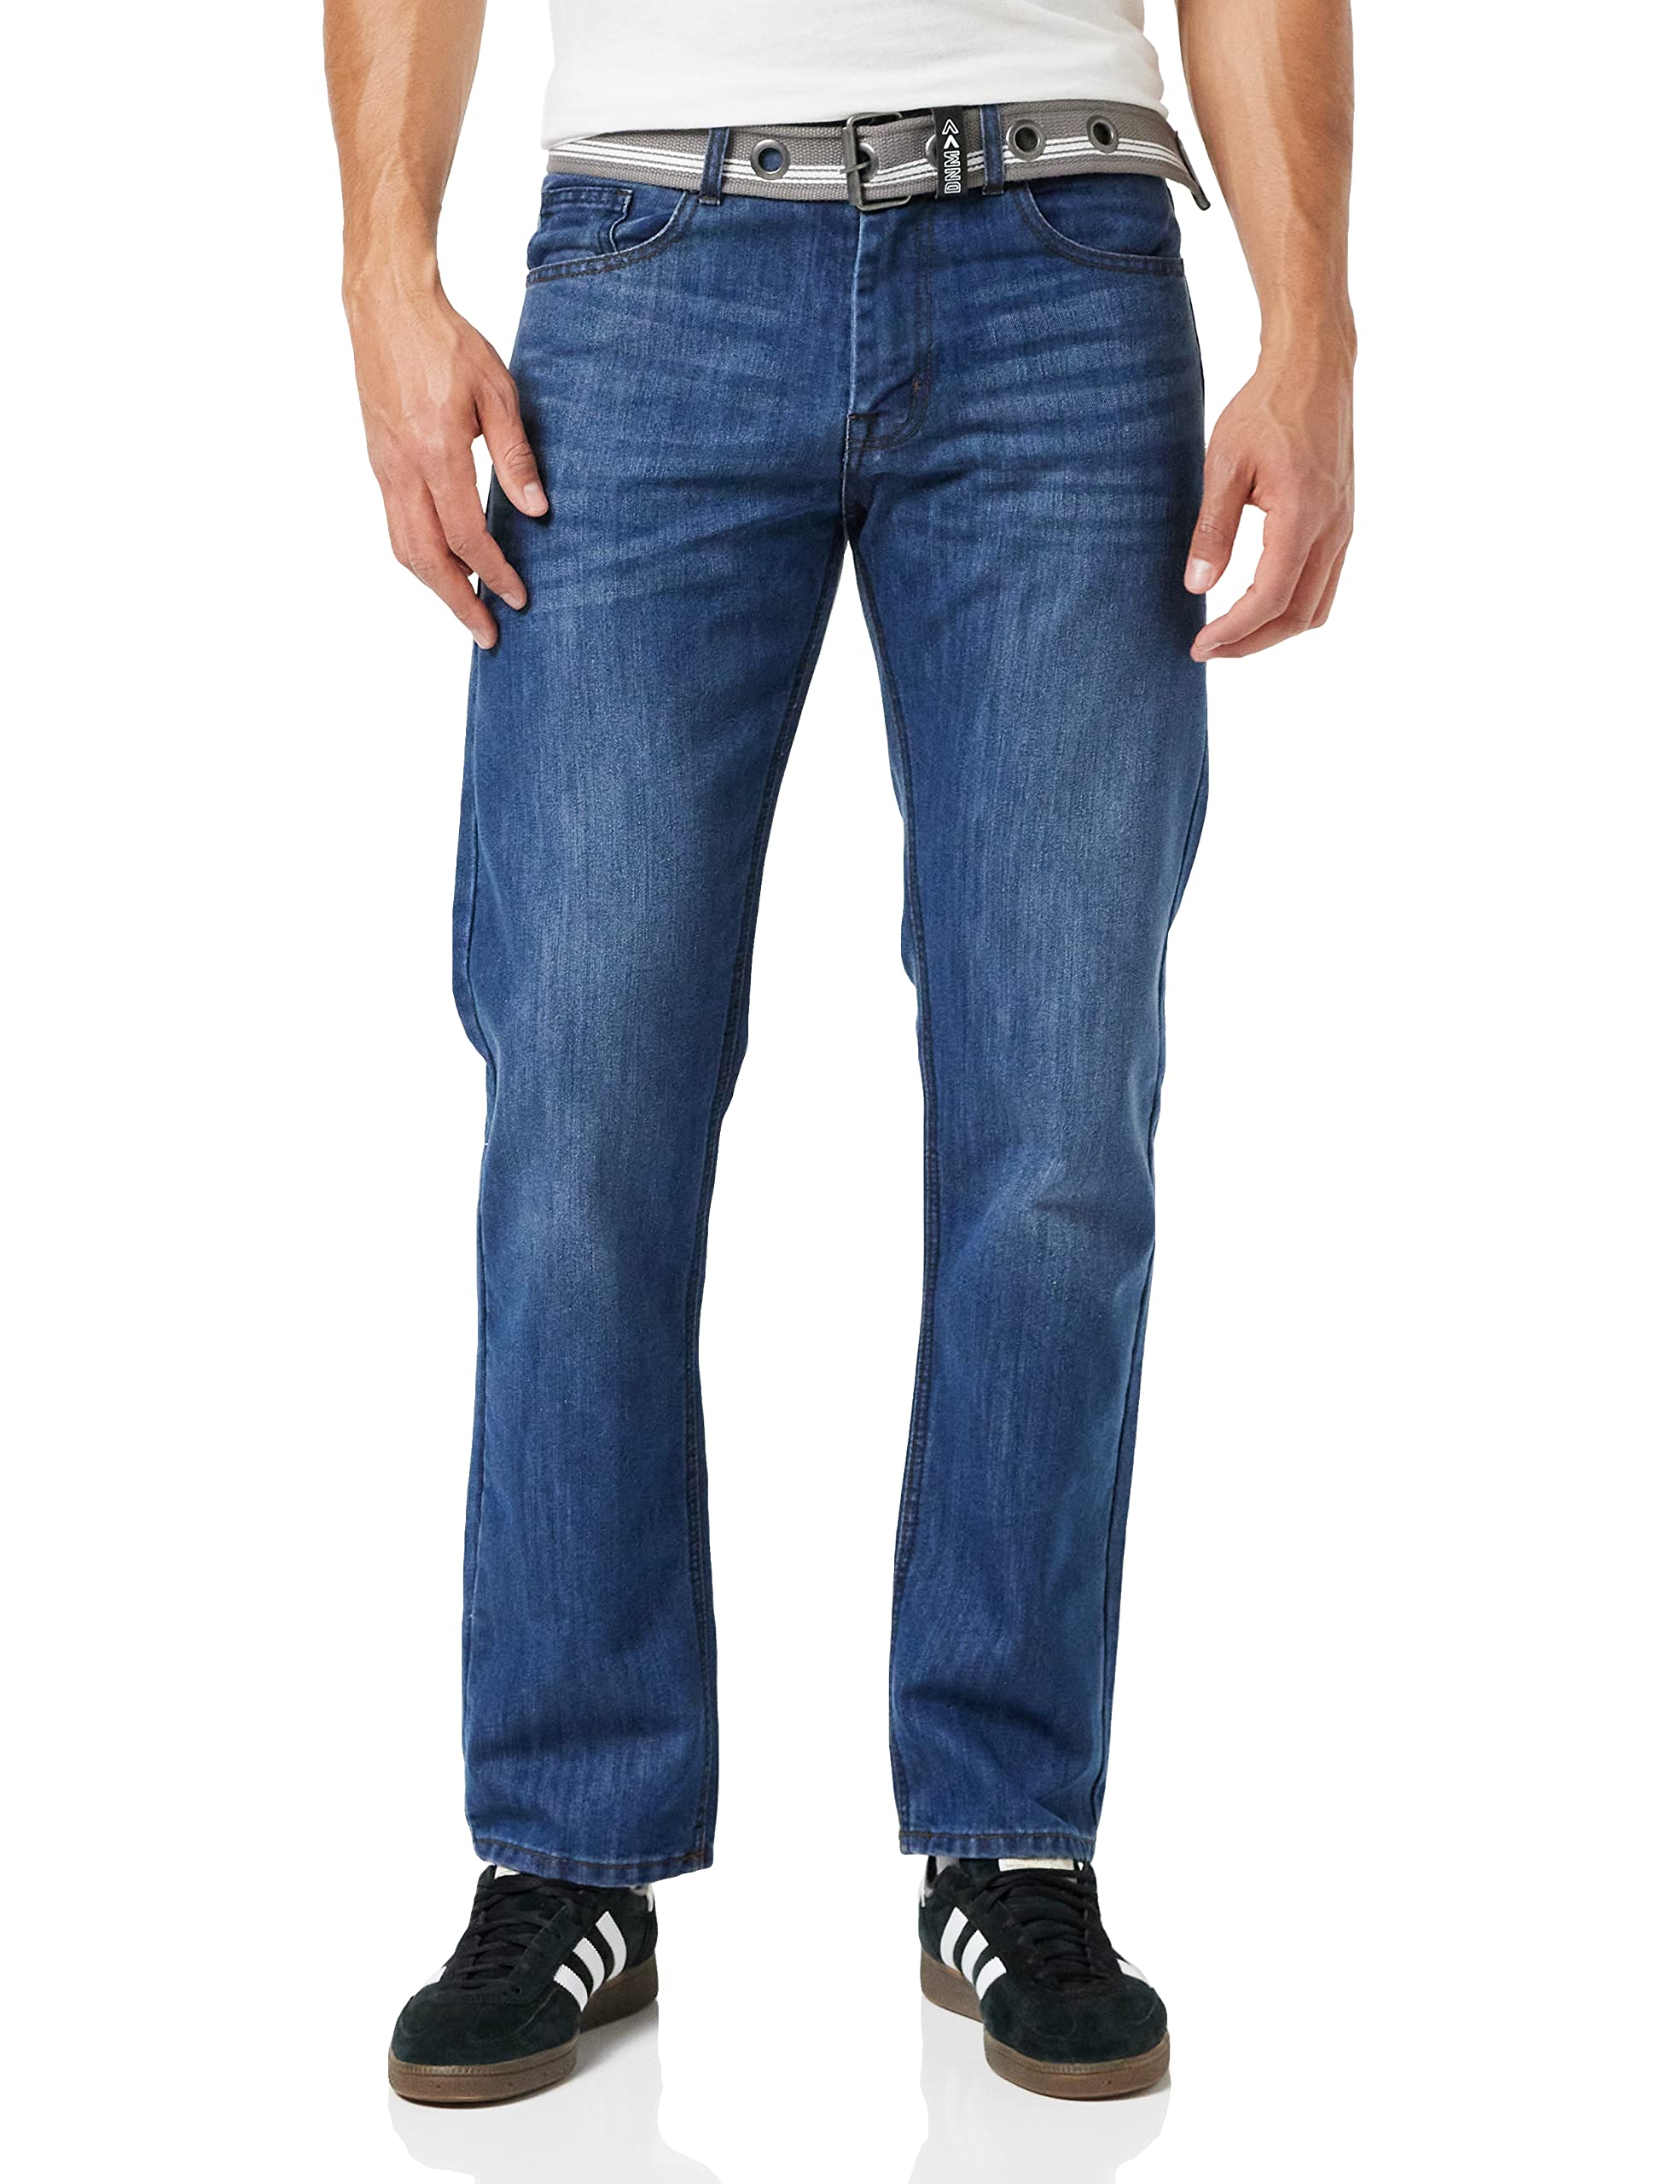 Enzo Herren EZ324 Straight Jeans, Blue (Midwash), W48/L32 (Size:48 R)